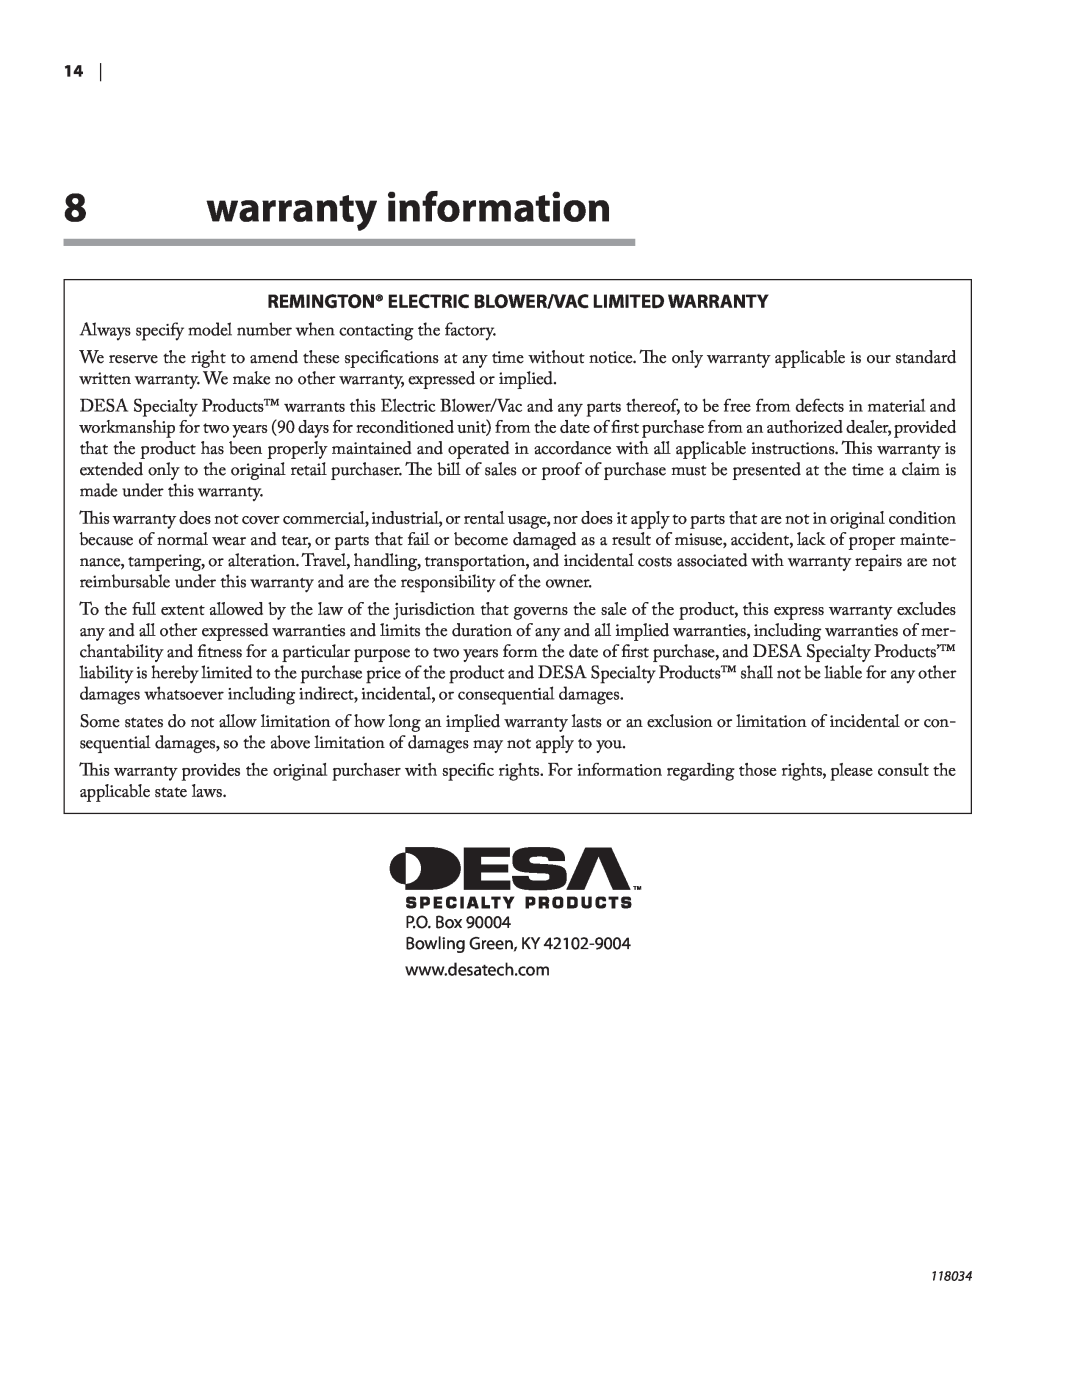 Remington BV12199A owner manual warranty information, Remington Electric Blower/Vac Limited Warranty 